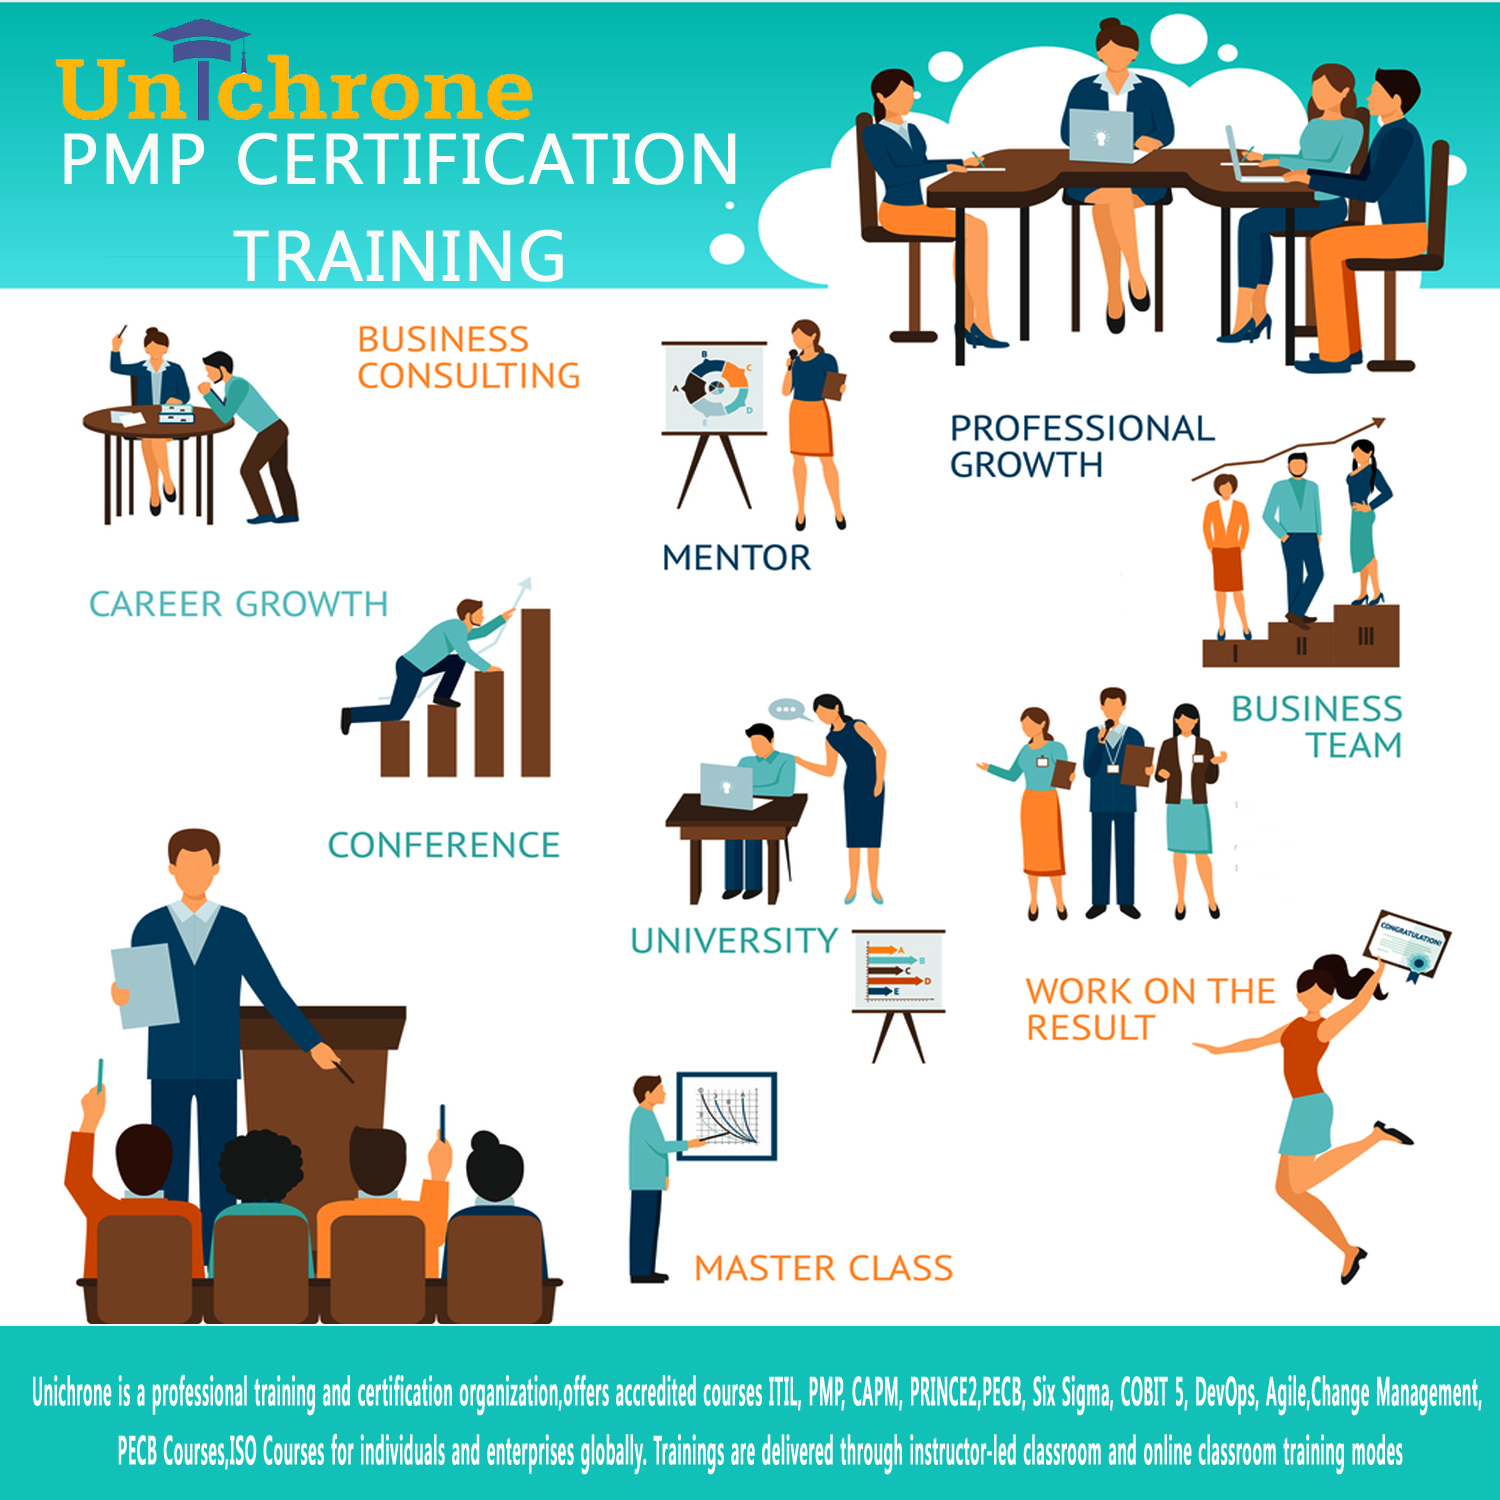 PMP Certification Training Course in Canada, Edmonton, Alberta, Canada